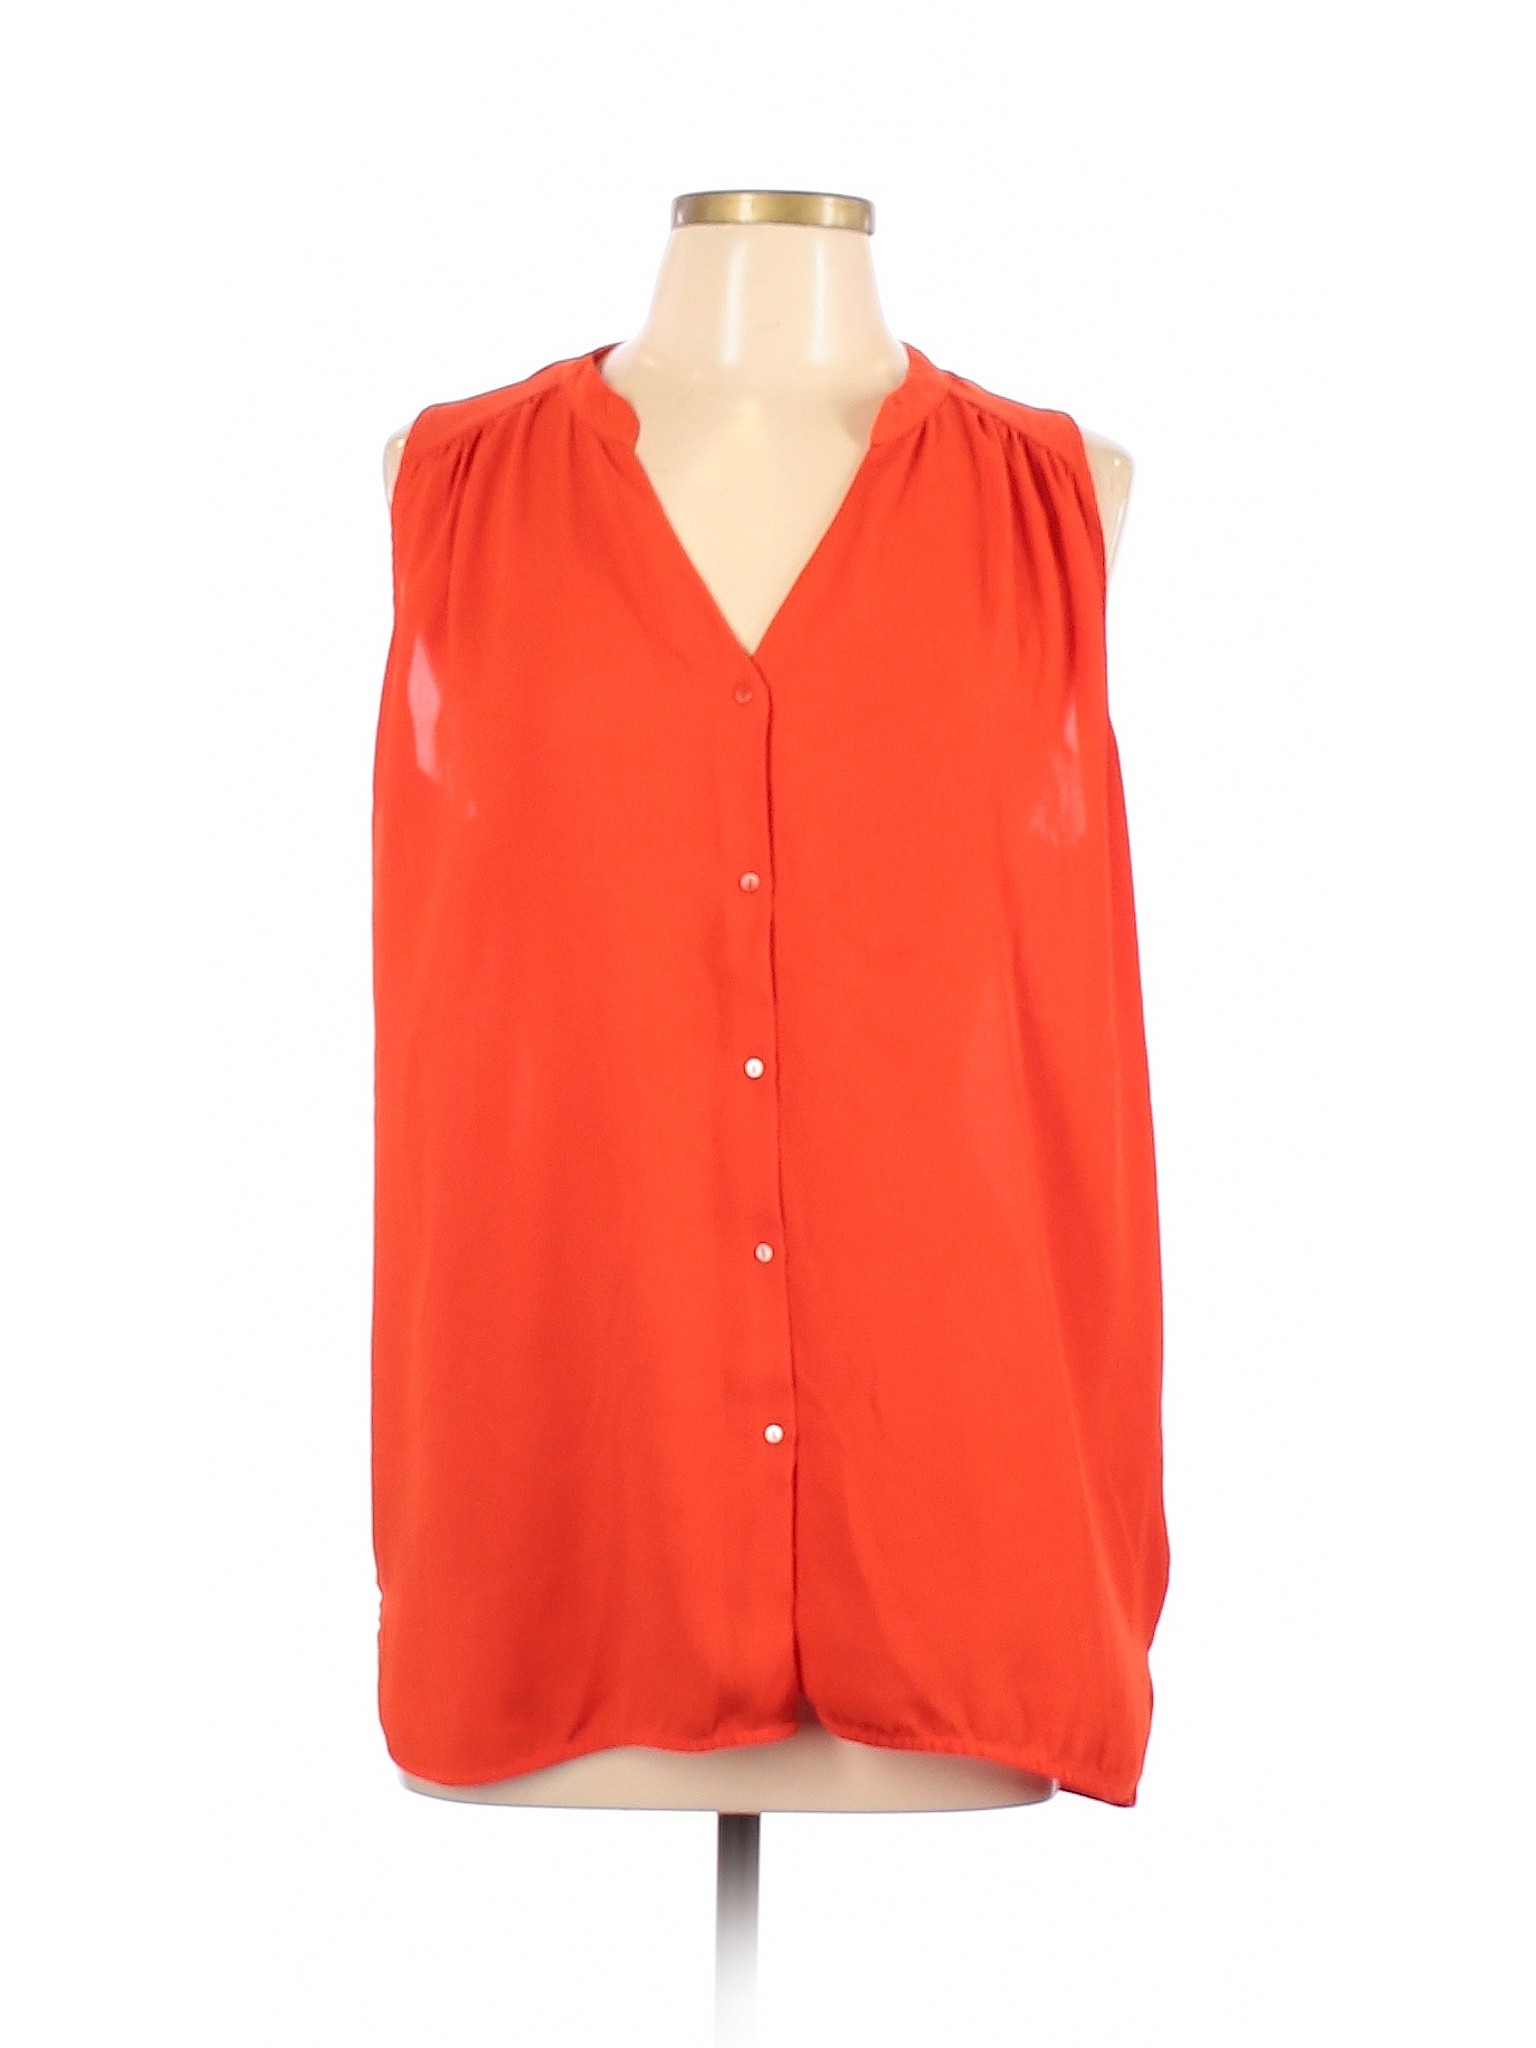 H&M Women Orange Sleeveless Blouse L | eBay